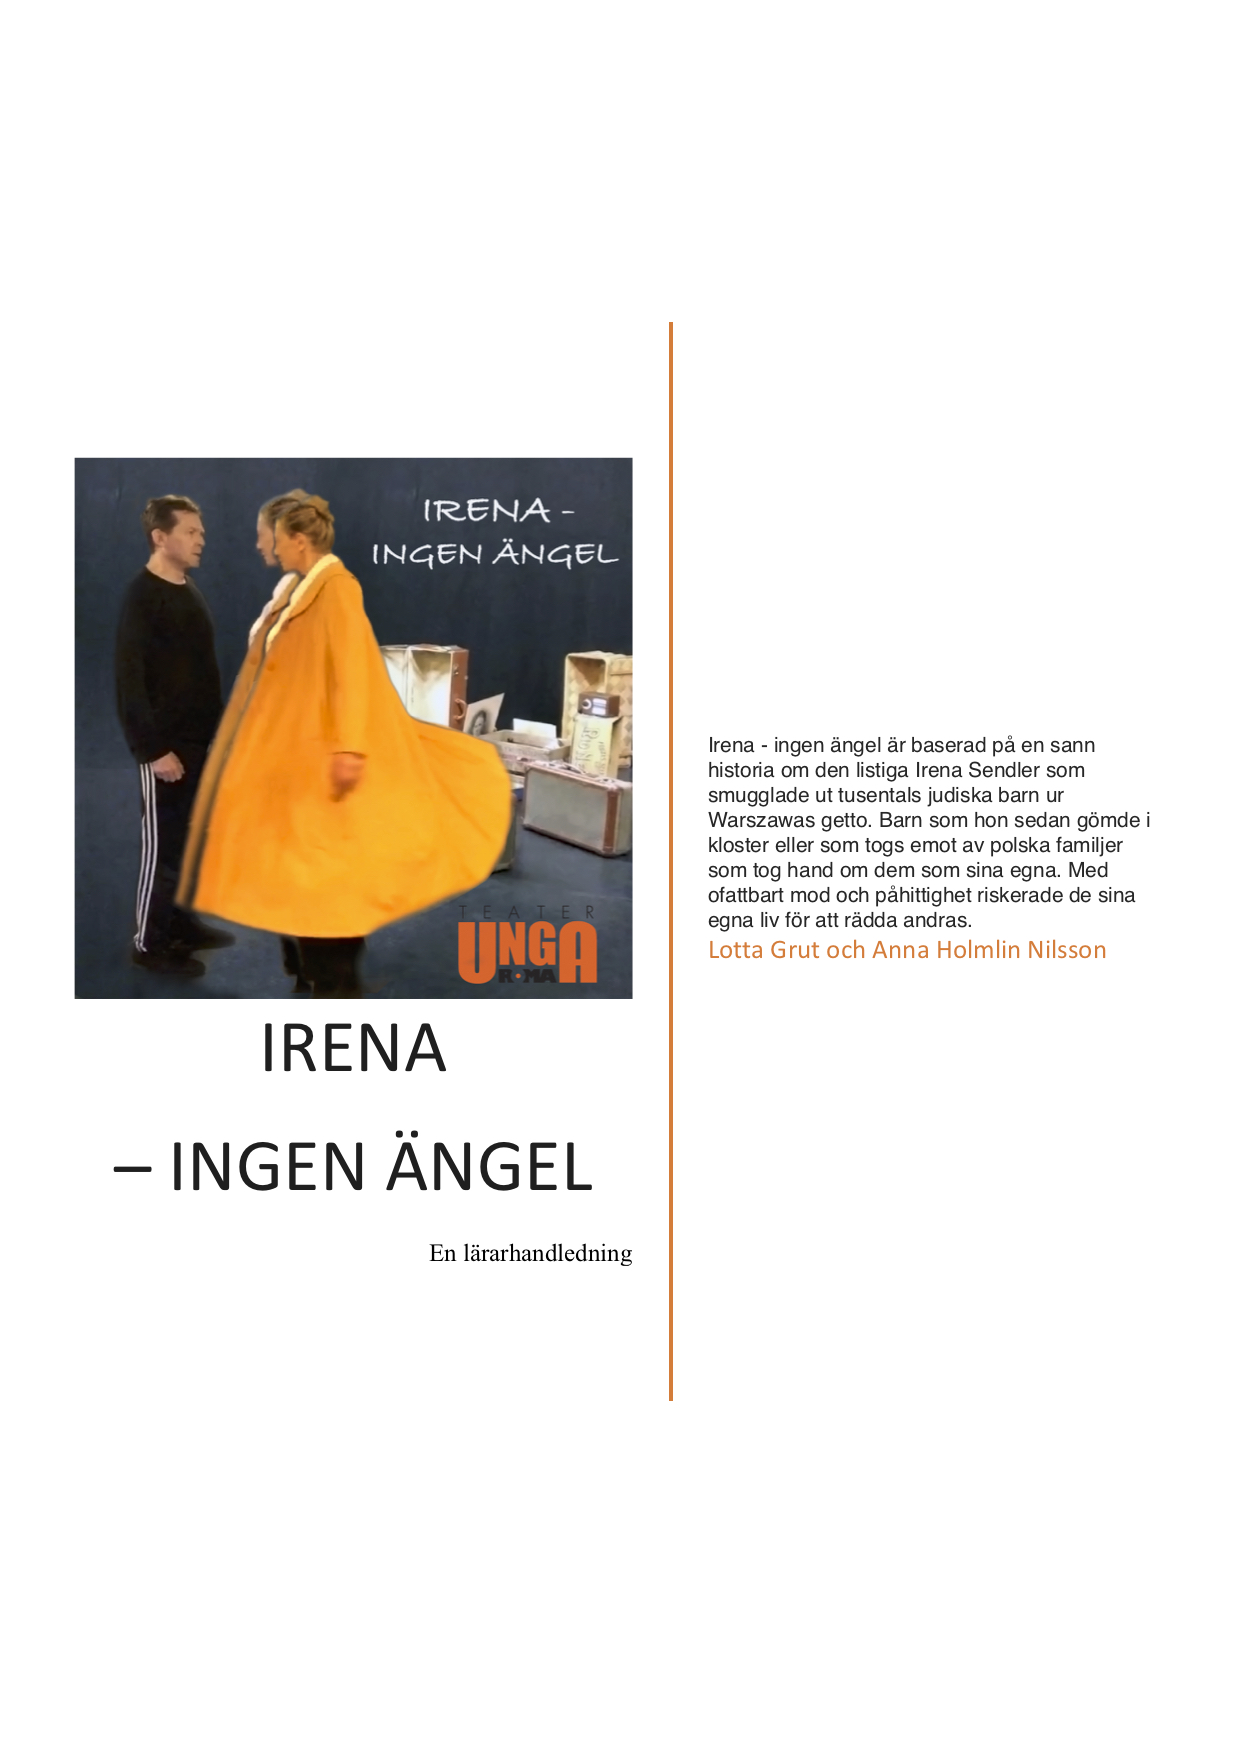 Irena Ingen ängel lärarhandledning